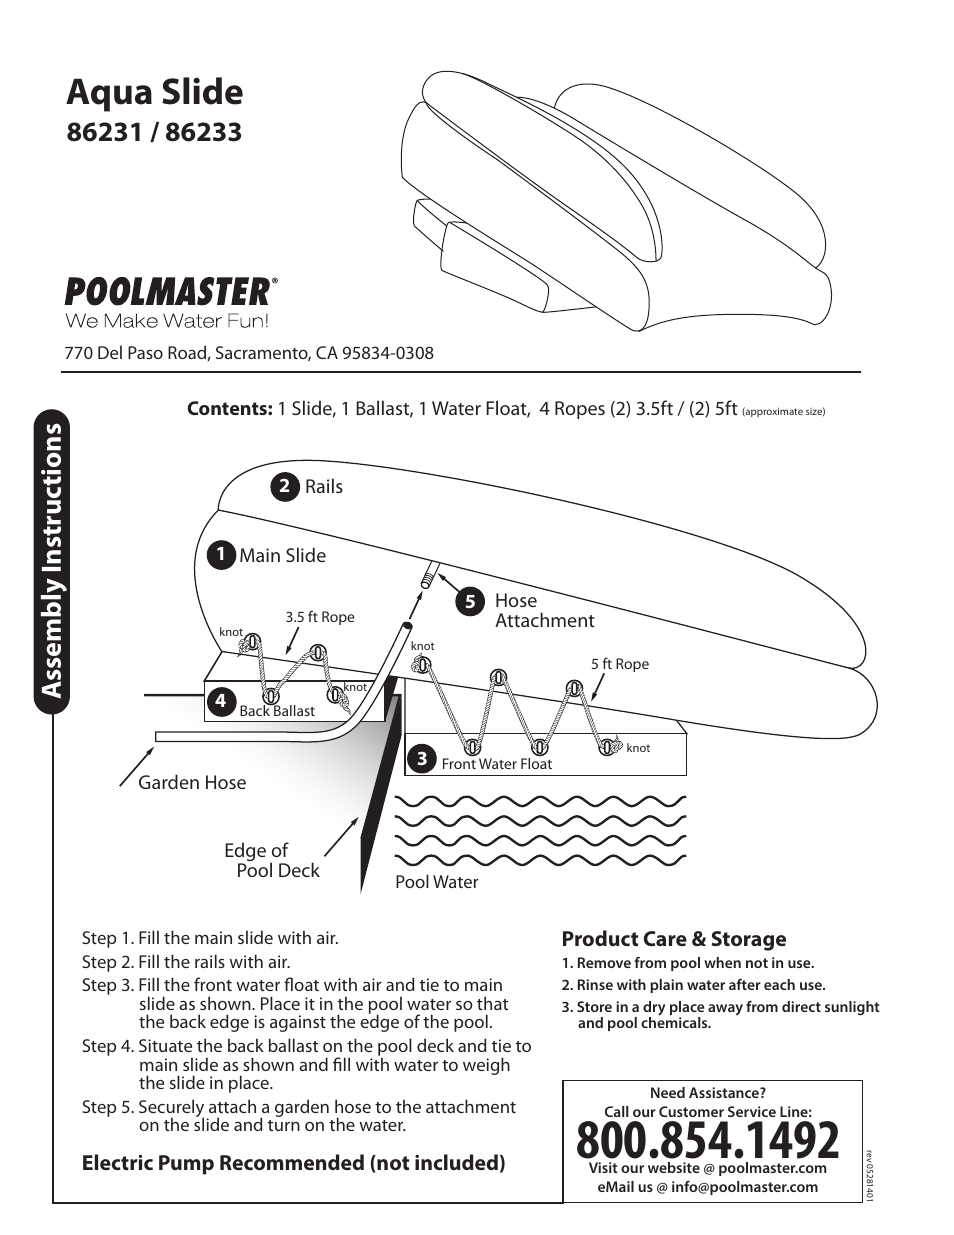 Poolmaster 86233 Aqua Launch Slide User Manual | 1 page | Also for: 86231 Aqua  Launch Slide